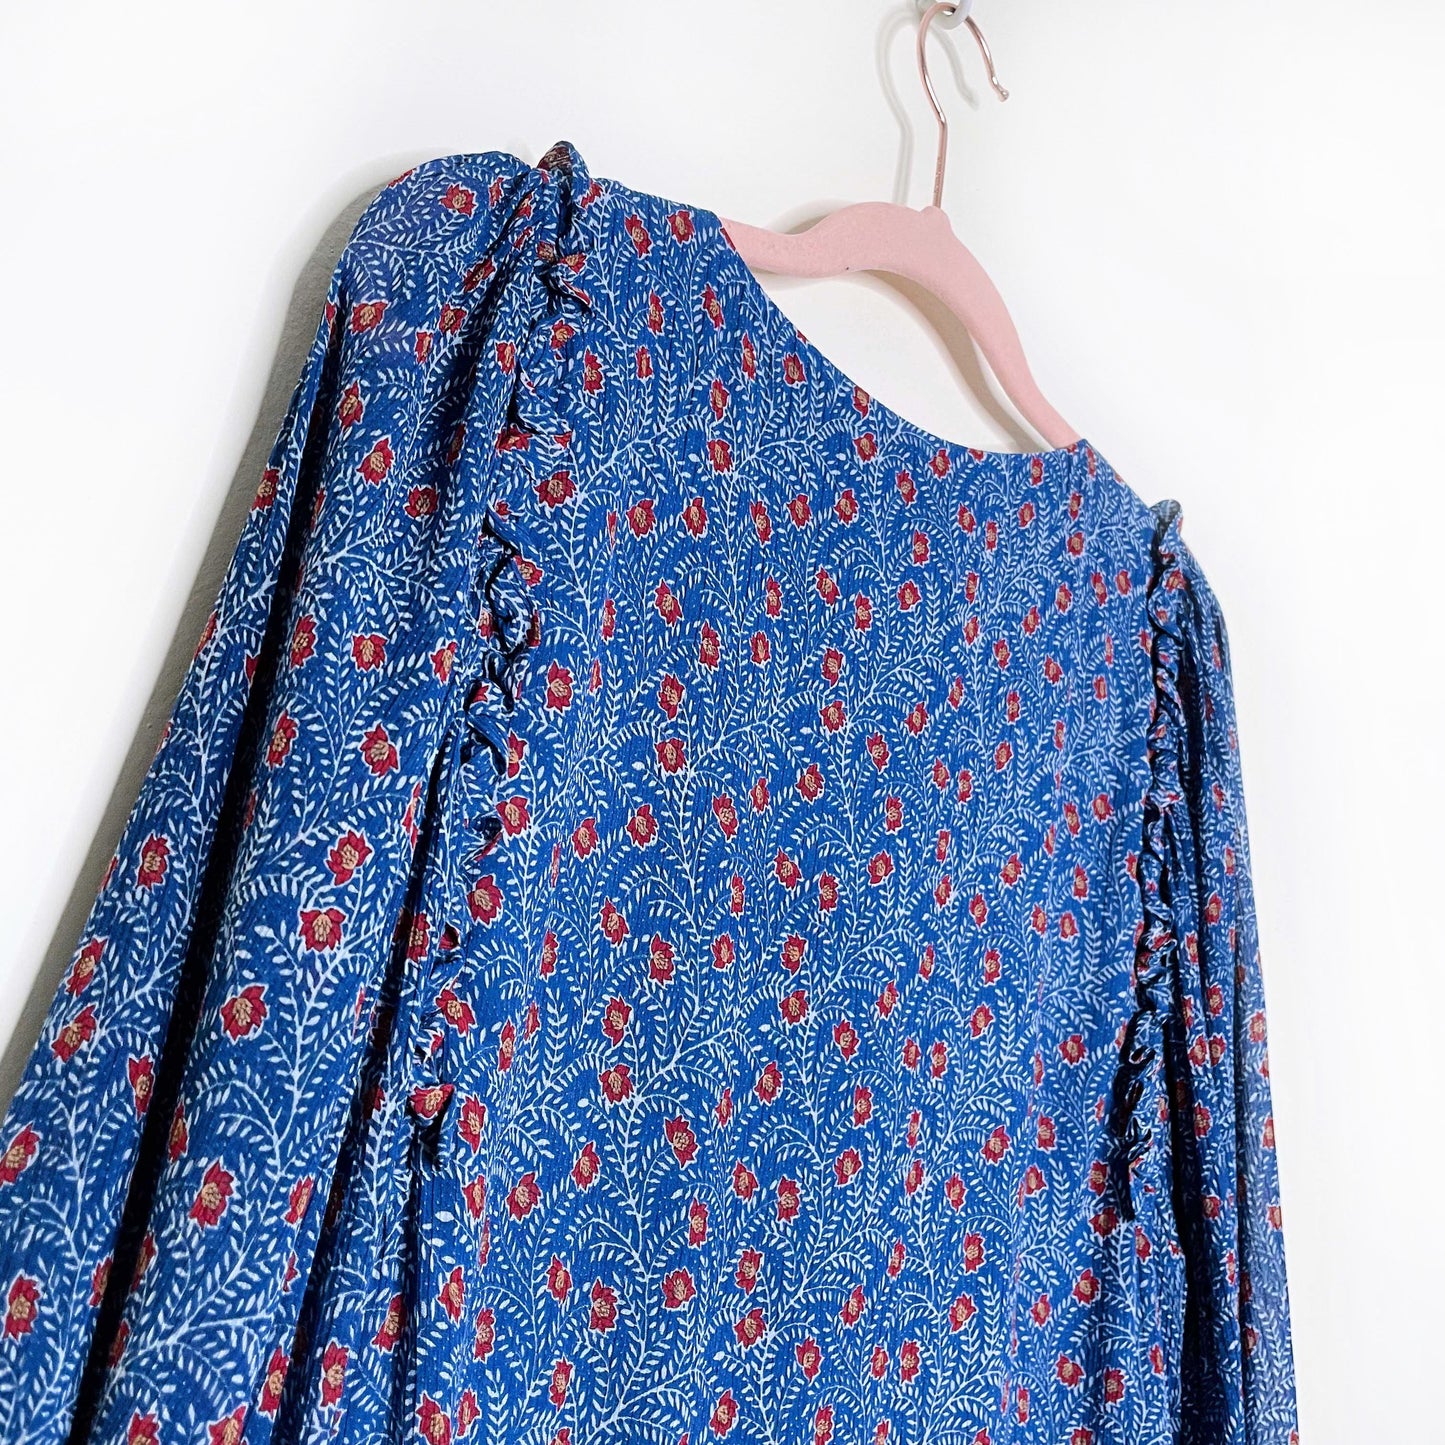 sézane blue floral evy boho dress in palermo print - size 34